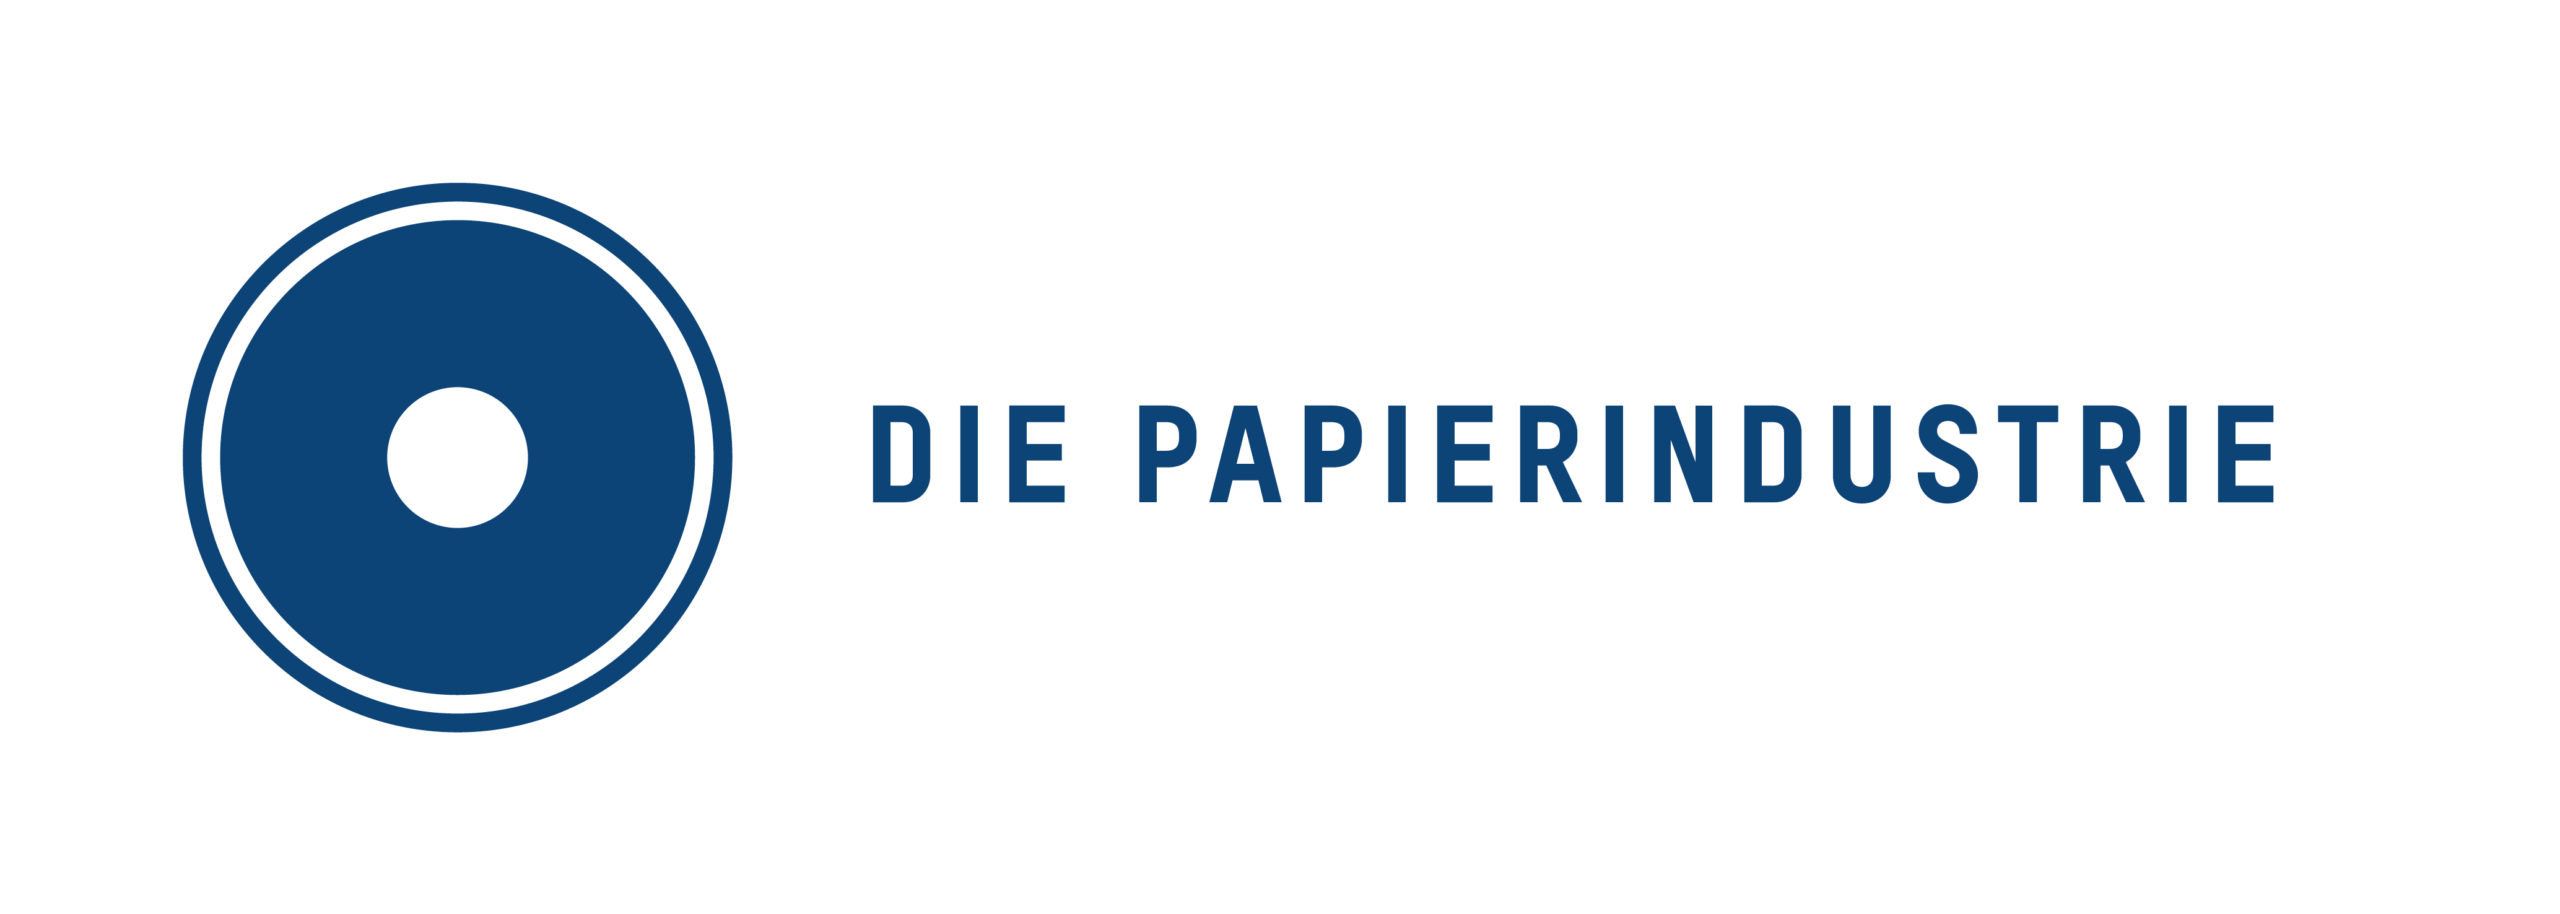 VDP Logo